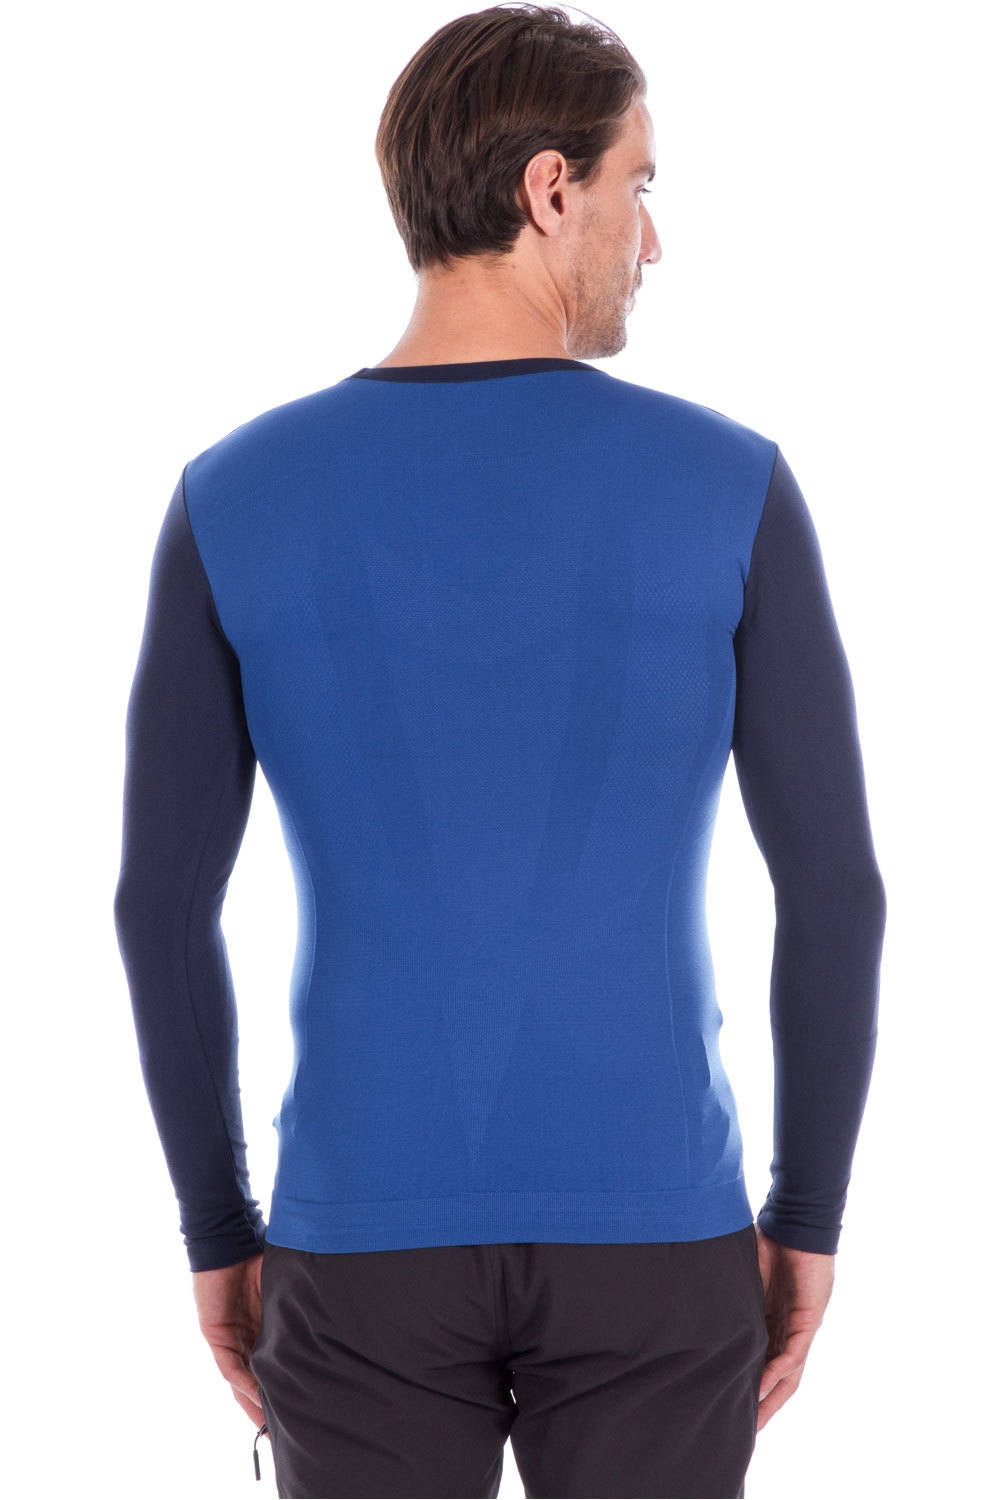 camisetas de manga larga o manga corta, o pantalones a elegir hasta la talla XXXXL interior de forro polar Ropa de esquí térmica para Hombre 